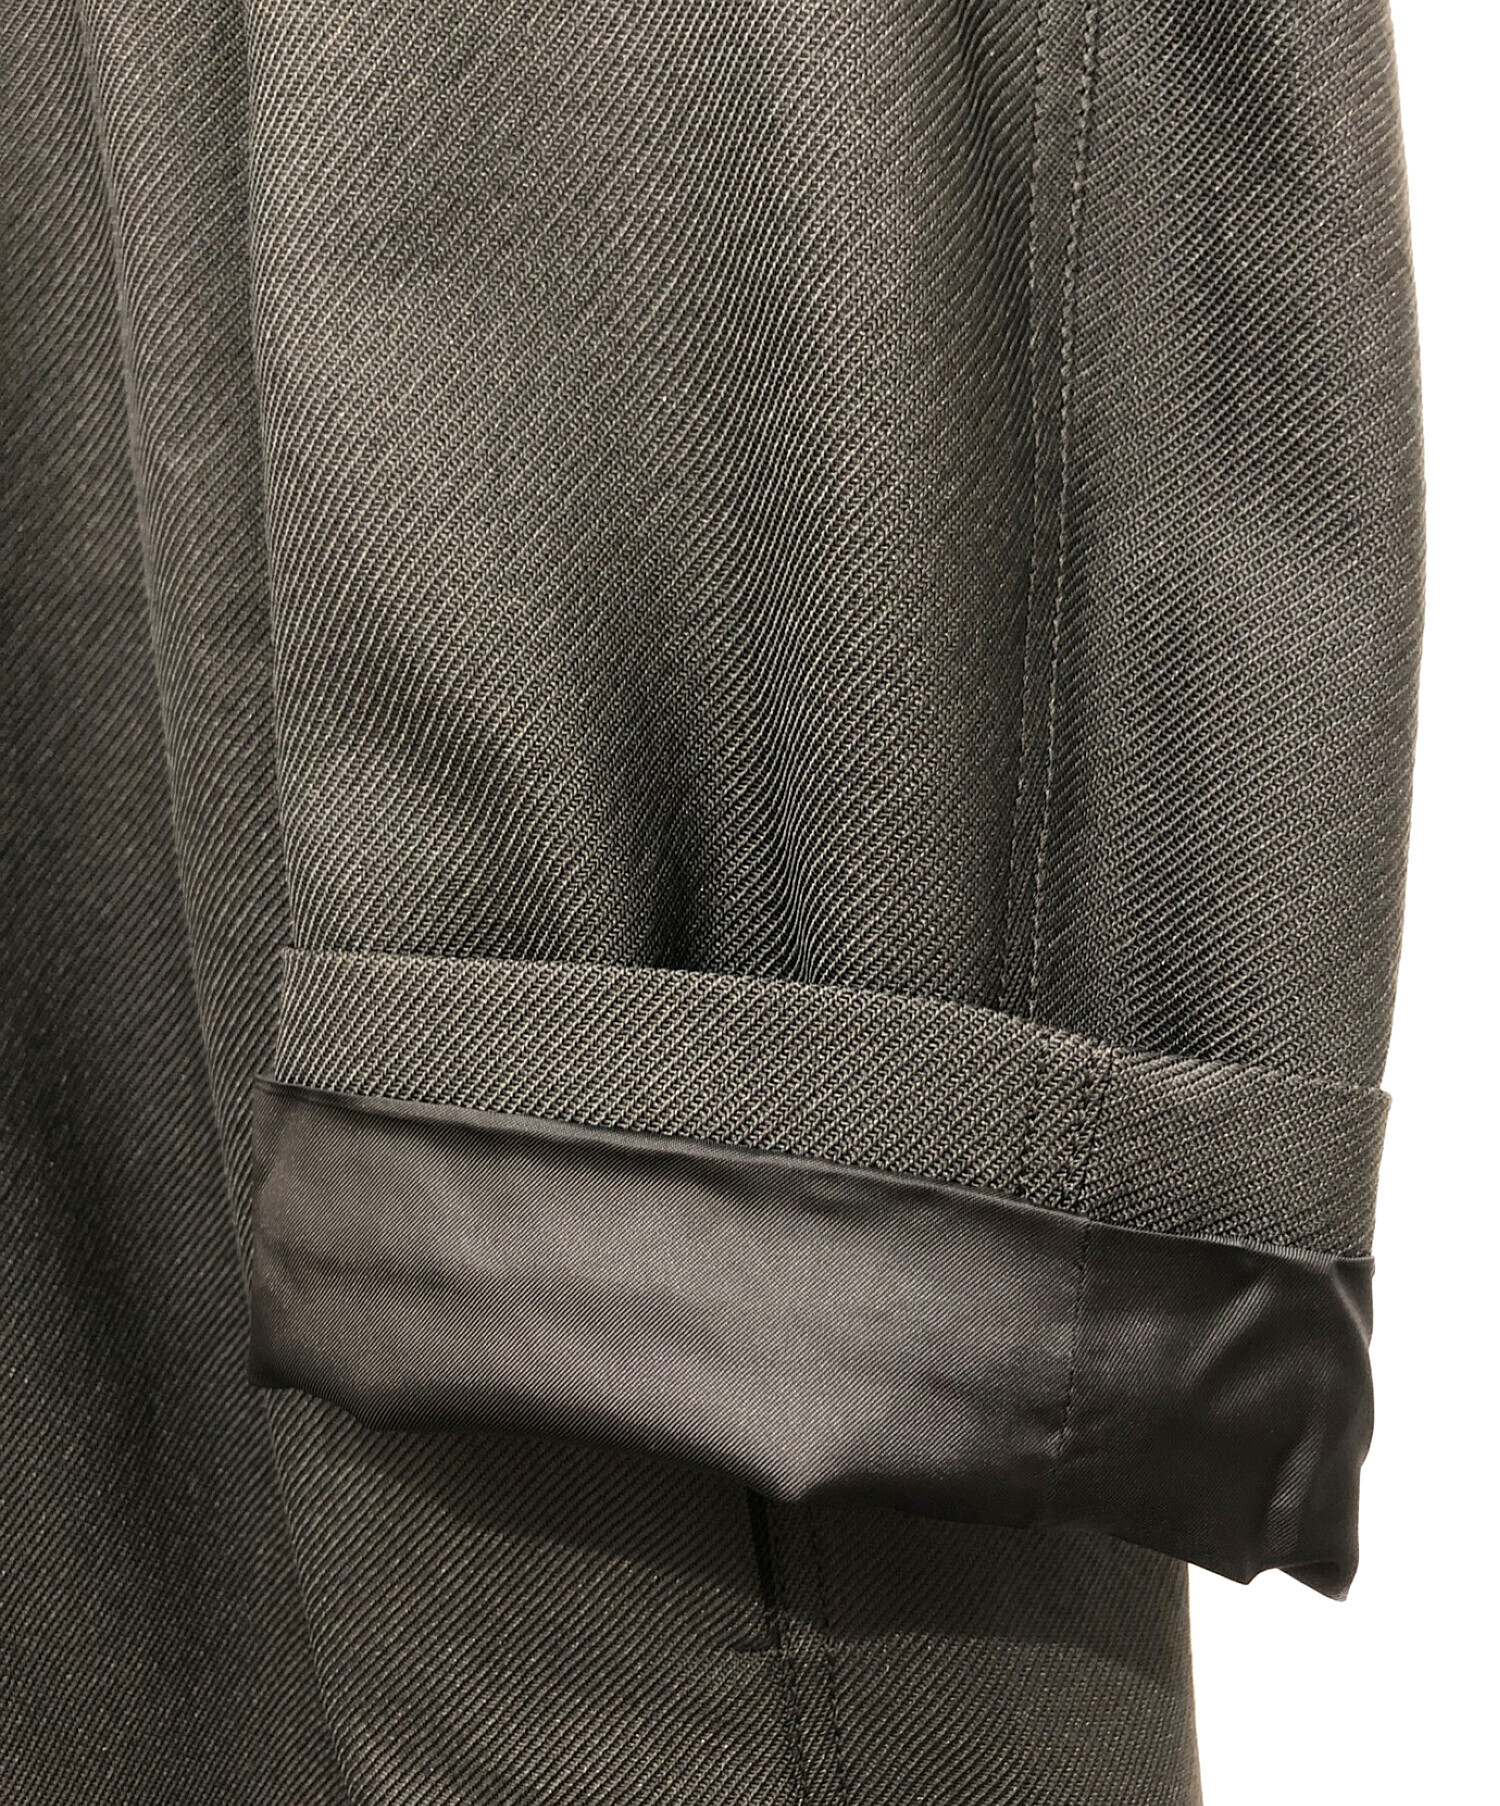 JIL SANDER (ジルサンダー) 22SS Sport Zip-Up Overcoat(スポーツジップアップオーバーコート) ブラック  サイズ:46